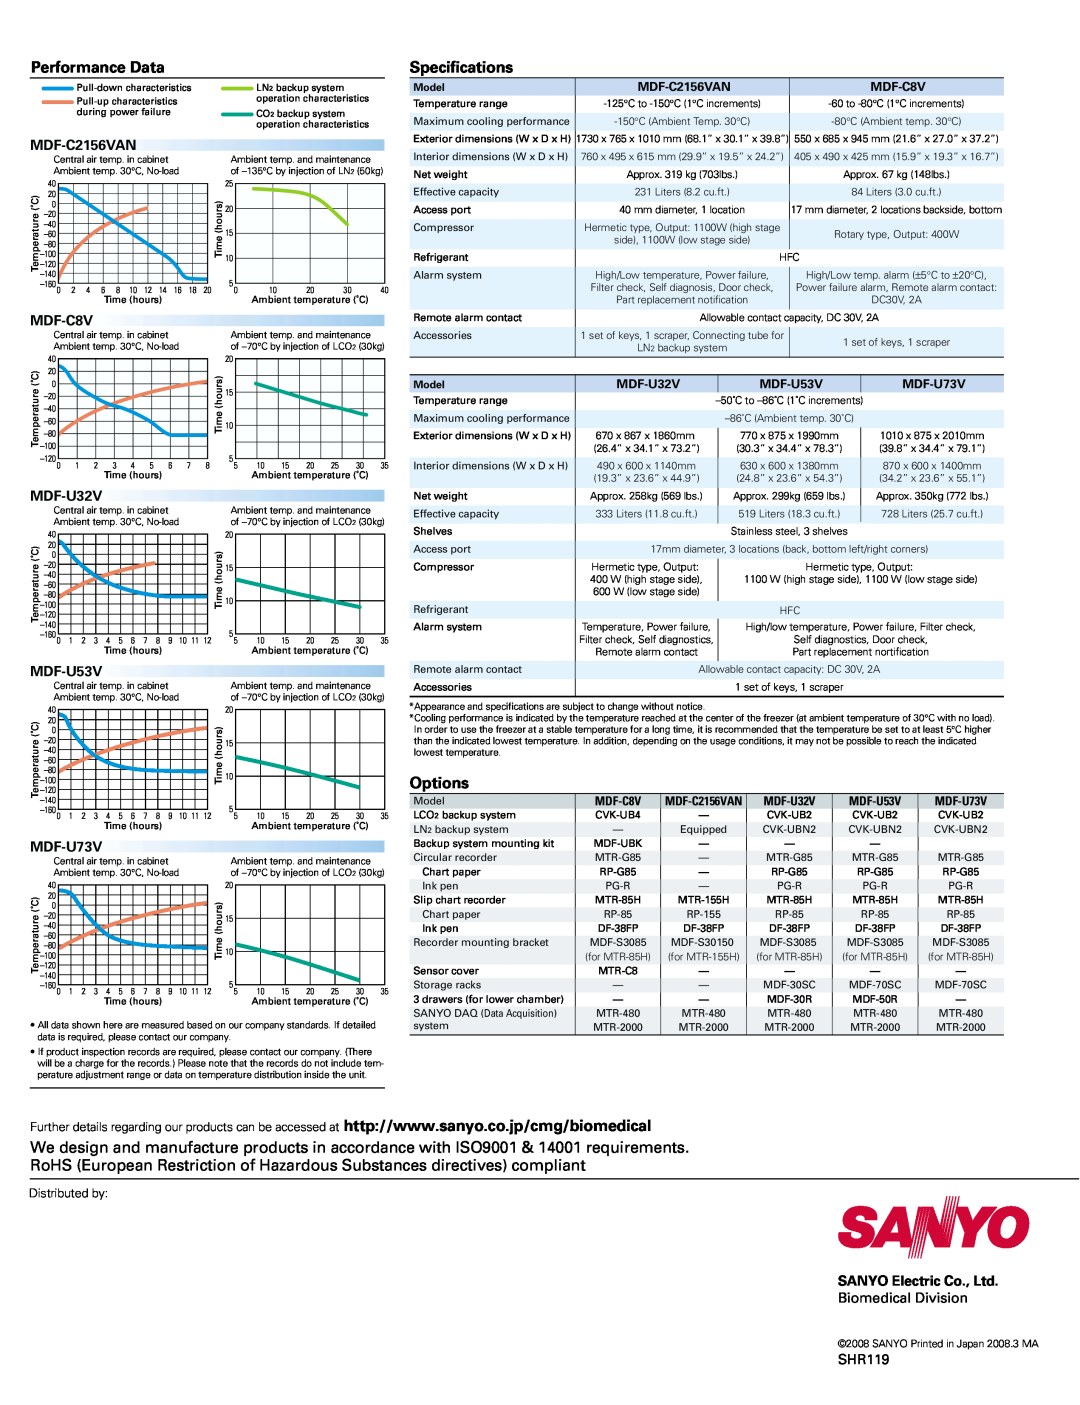 Sanyo MDF-U73V manual MDF-C2156VAN, MDF-C8V, MDF-U32V, MDF-U53V, Biomedical Division, SHR119, Model 